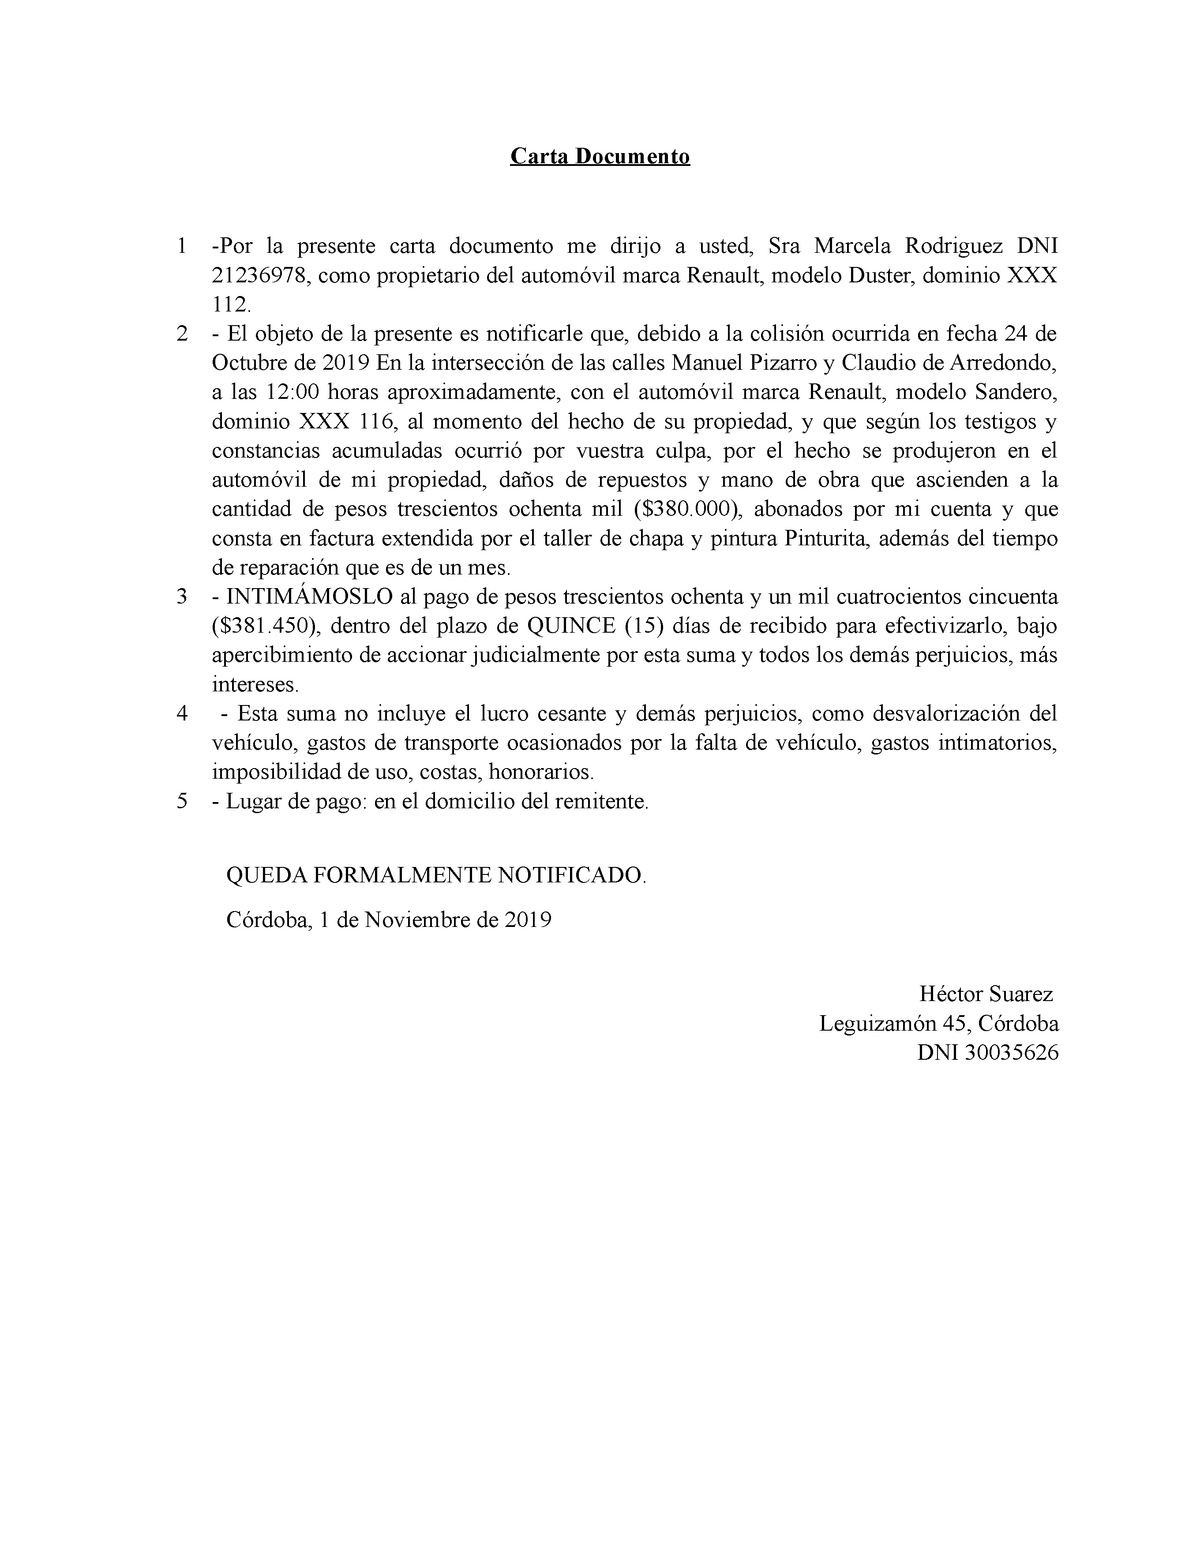 Carta Documento Y Demanda TP 2 - Carta Documento 1 -Por la presente carta  documento me dirijo a - Studocu